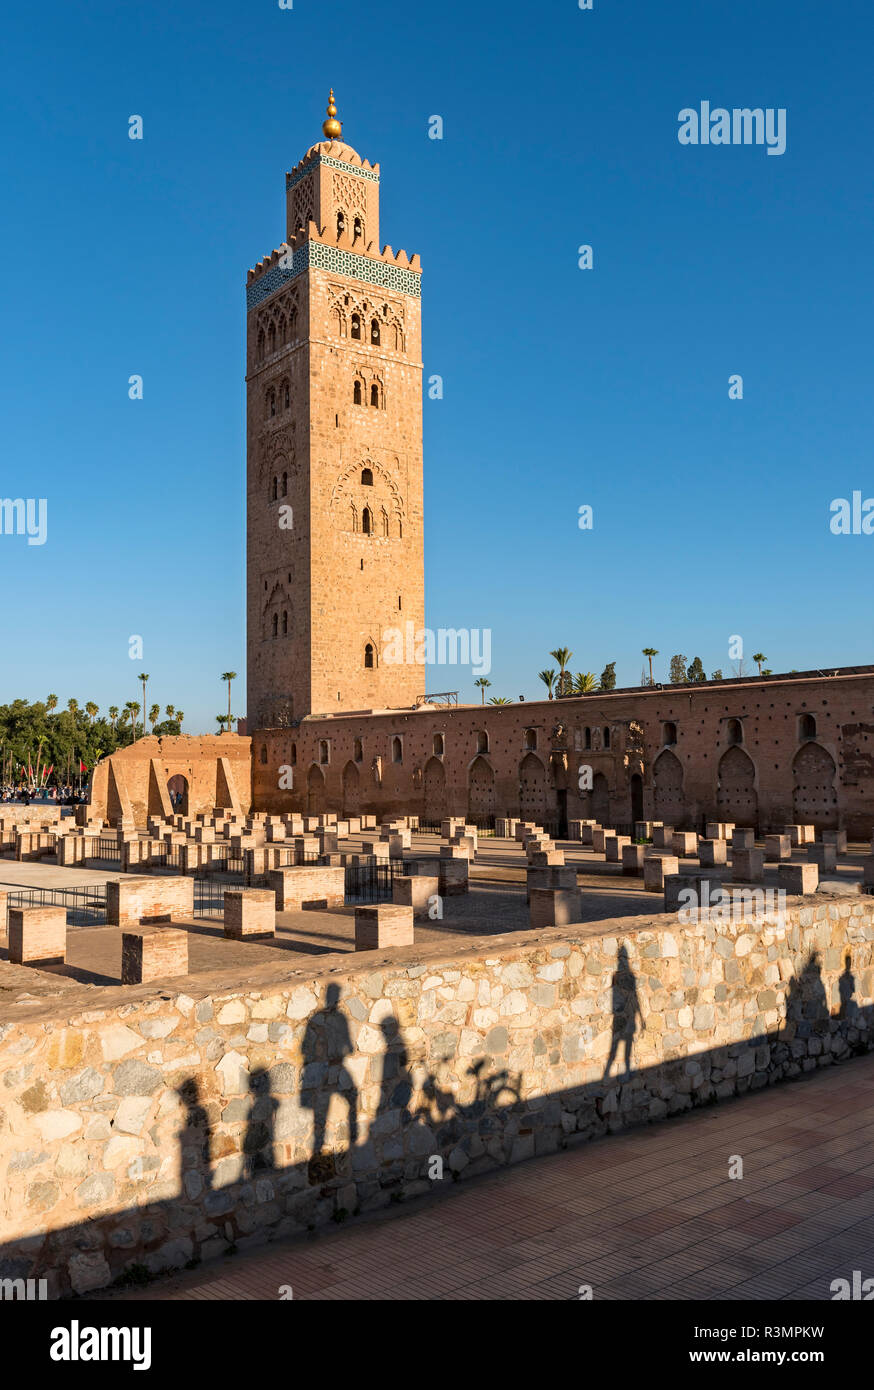 La Moschea di Koutoubia, Marrakech (Marrakech), Marocco Foto Stock